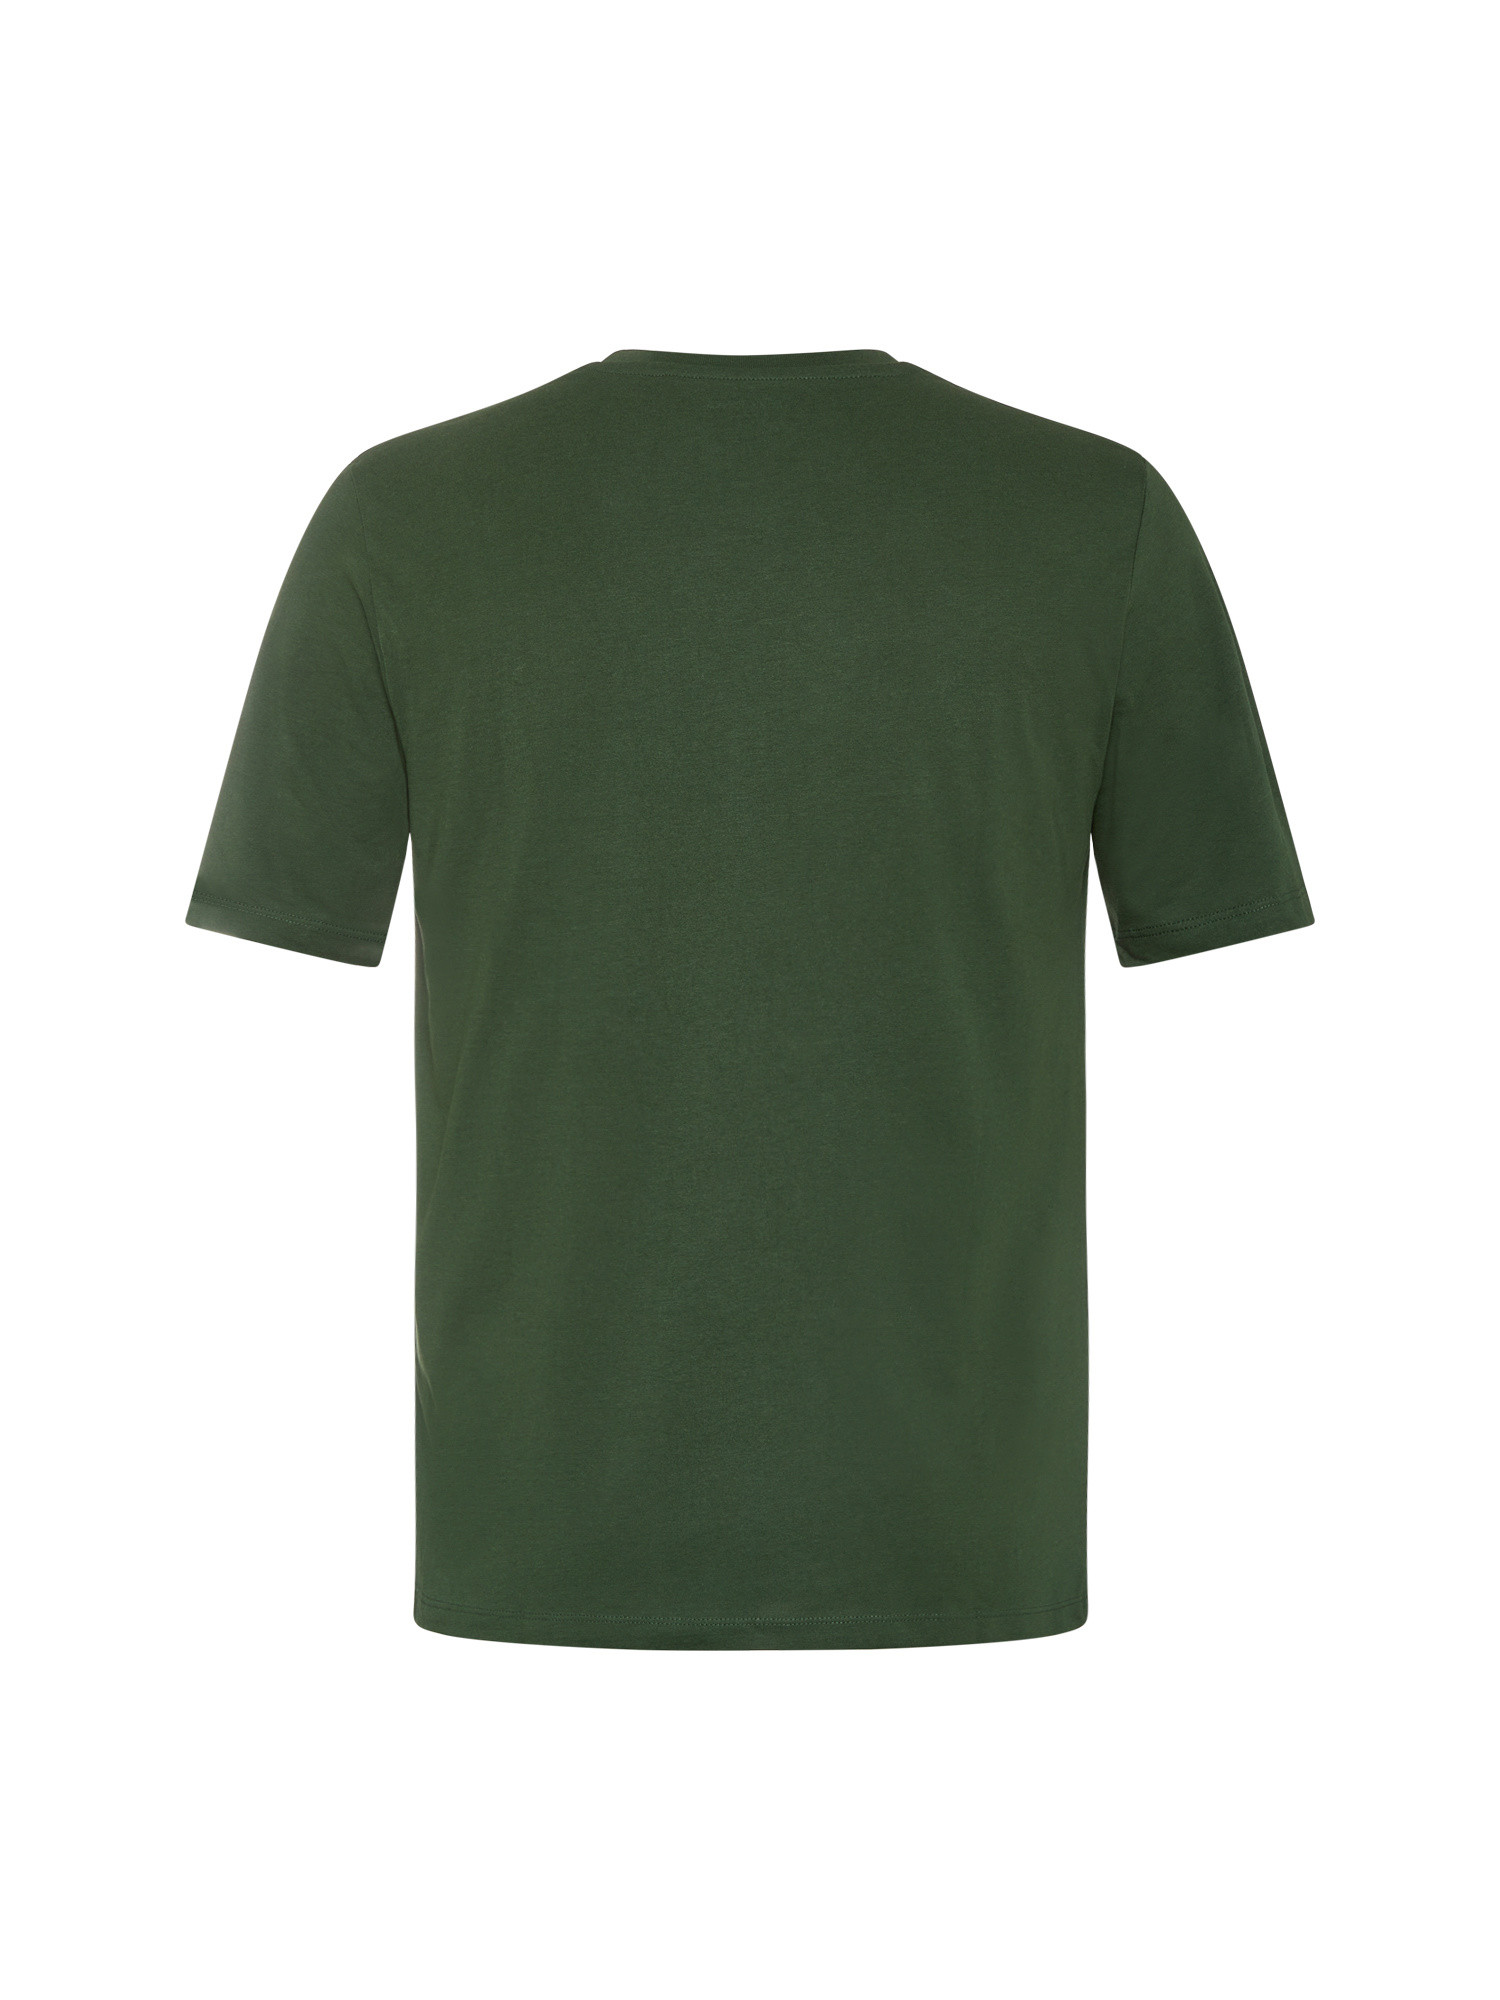 Jack & Jones - Cotton T-shirt, Dark Green, large image number 1